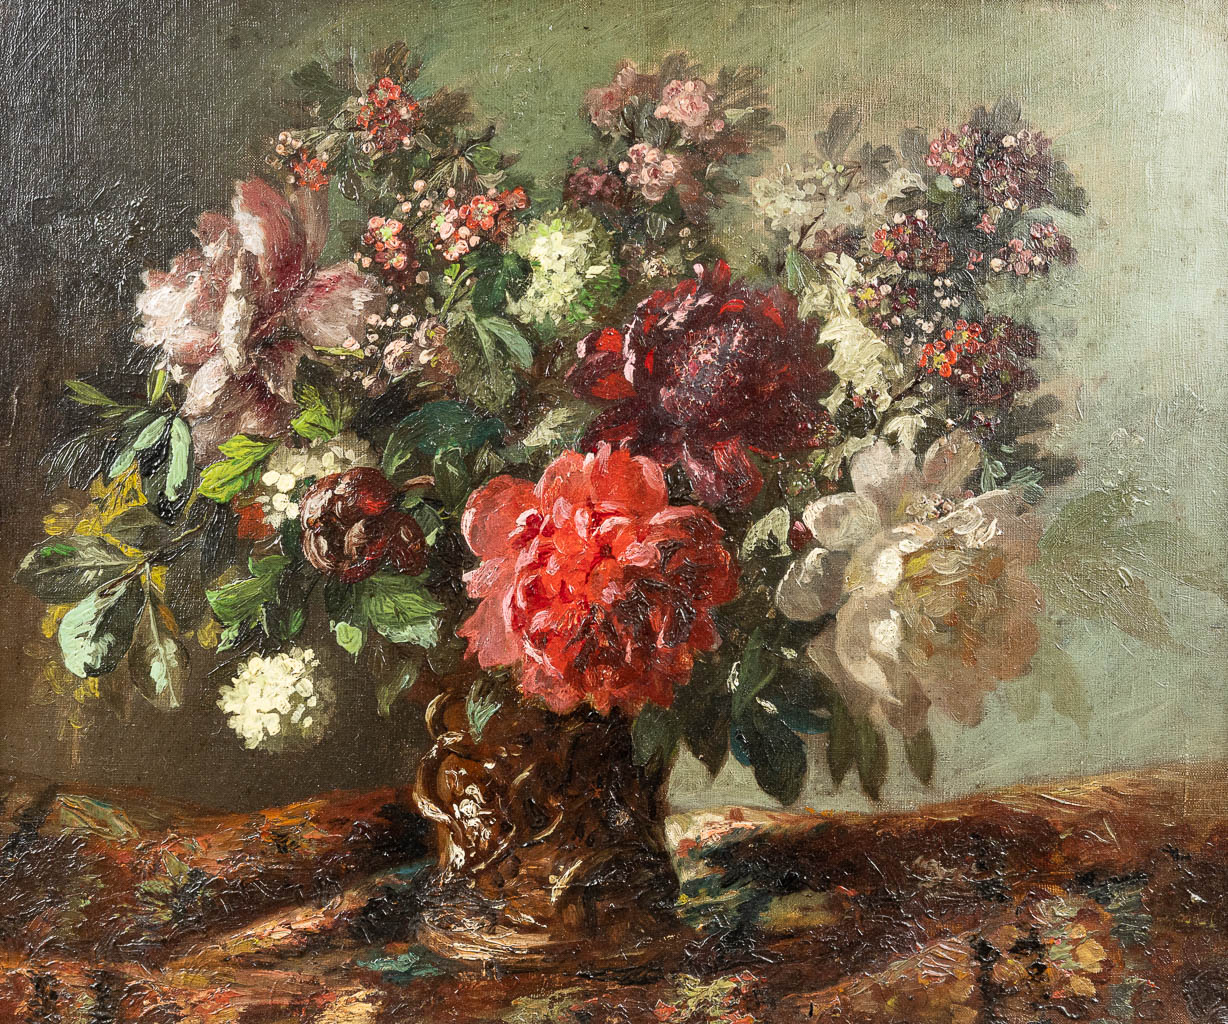 Monogram C.P. 'Flower Vase' a painting, oil on canvas. (63 x 50 cm)